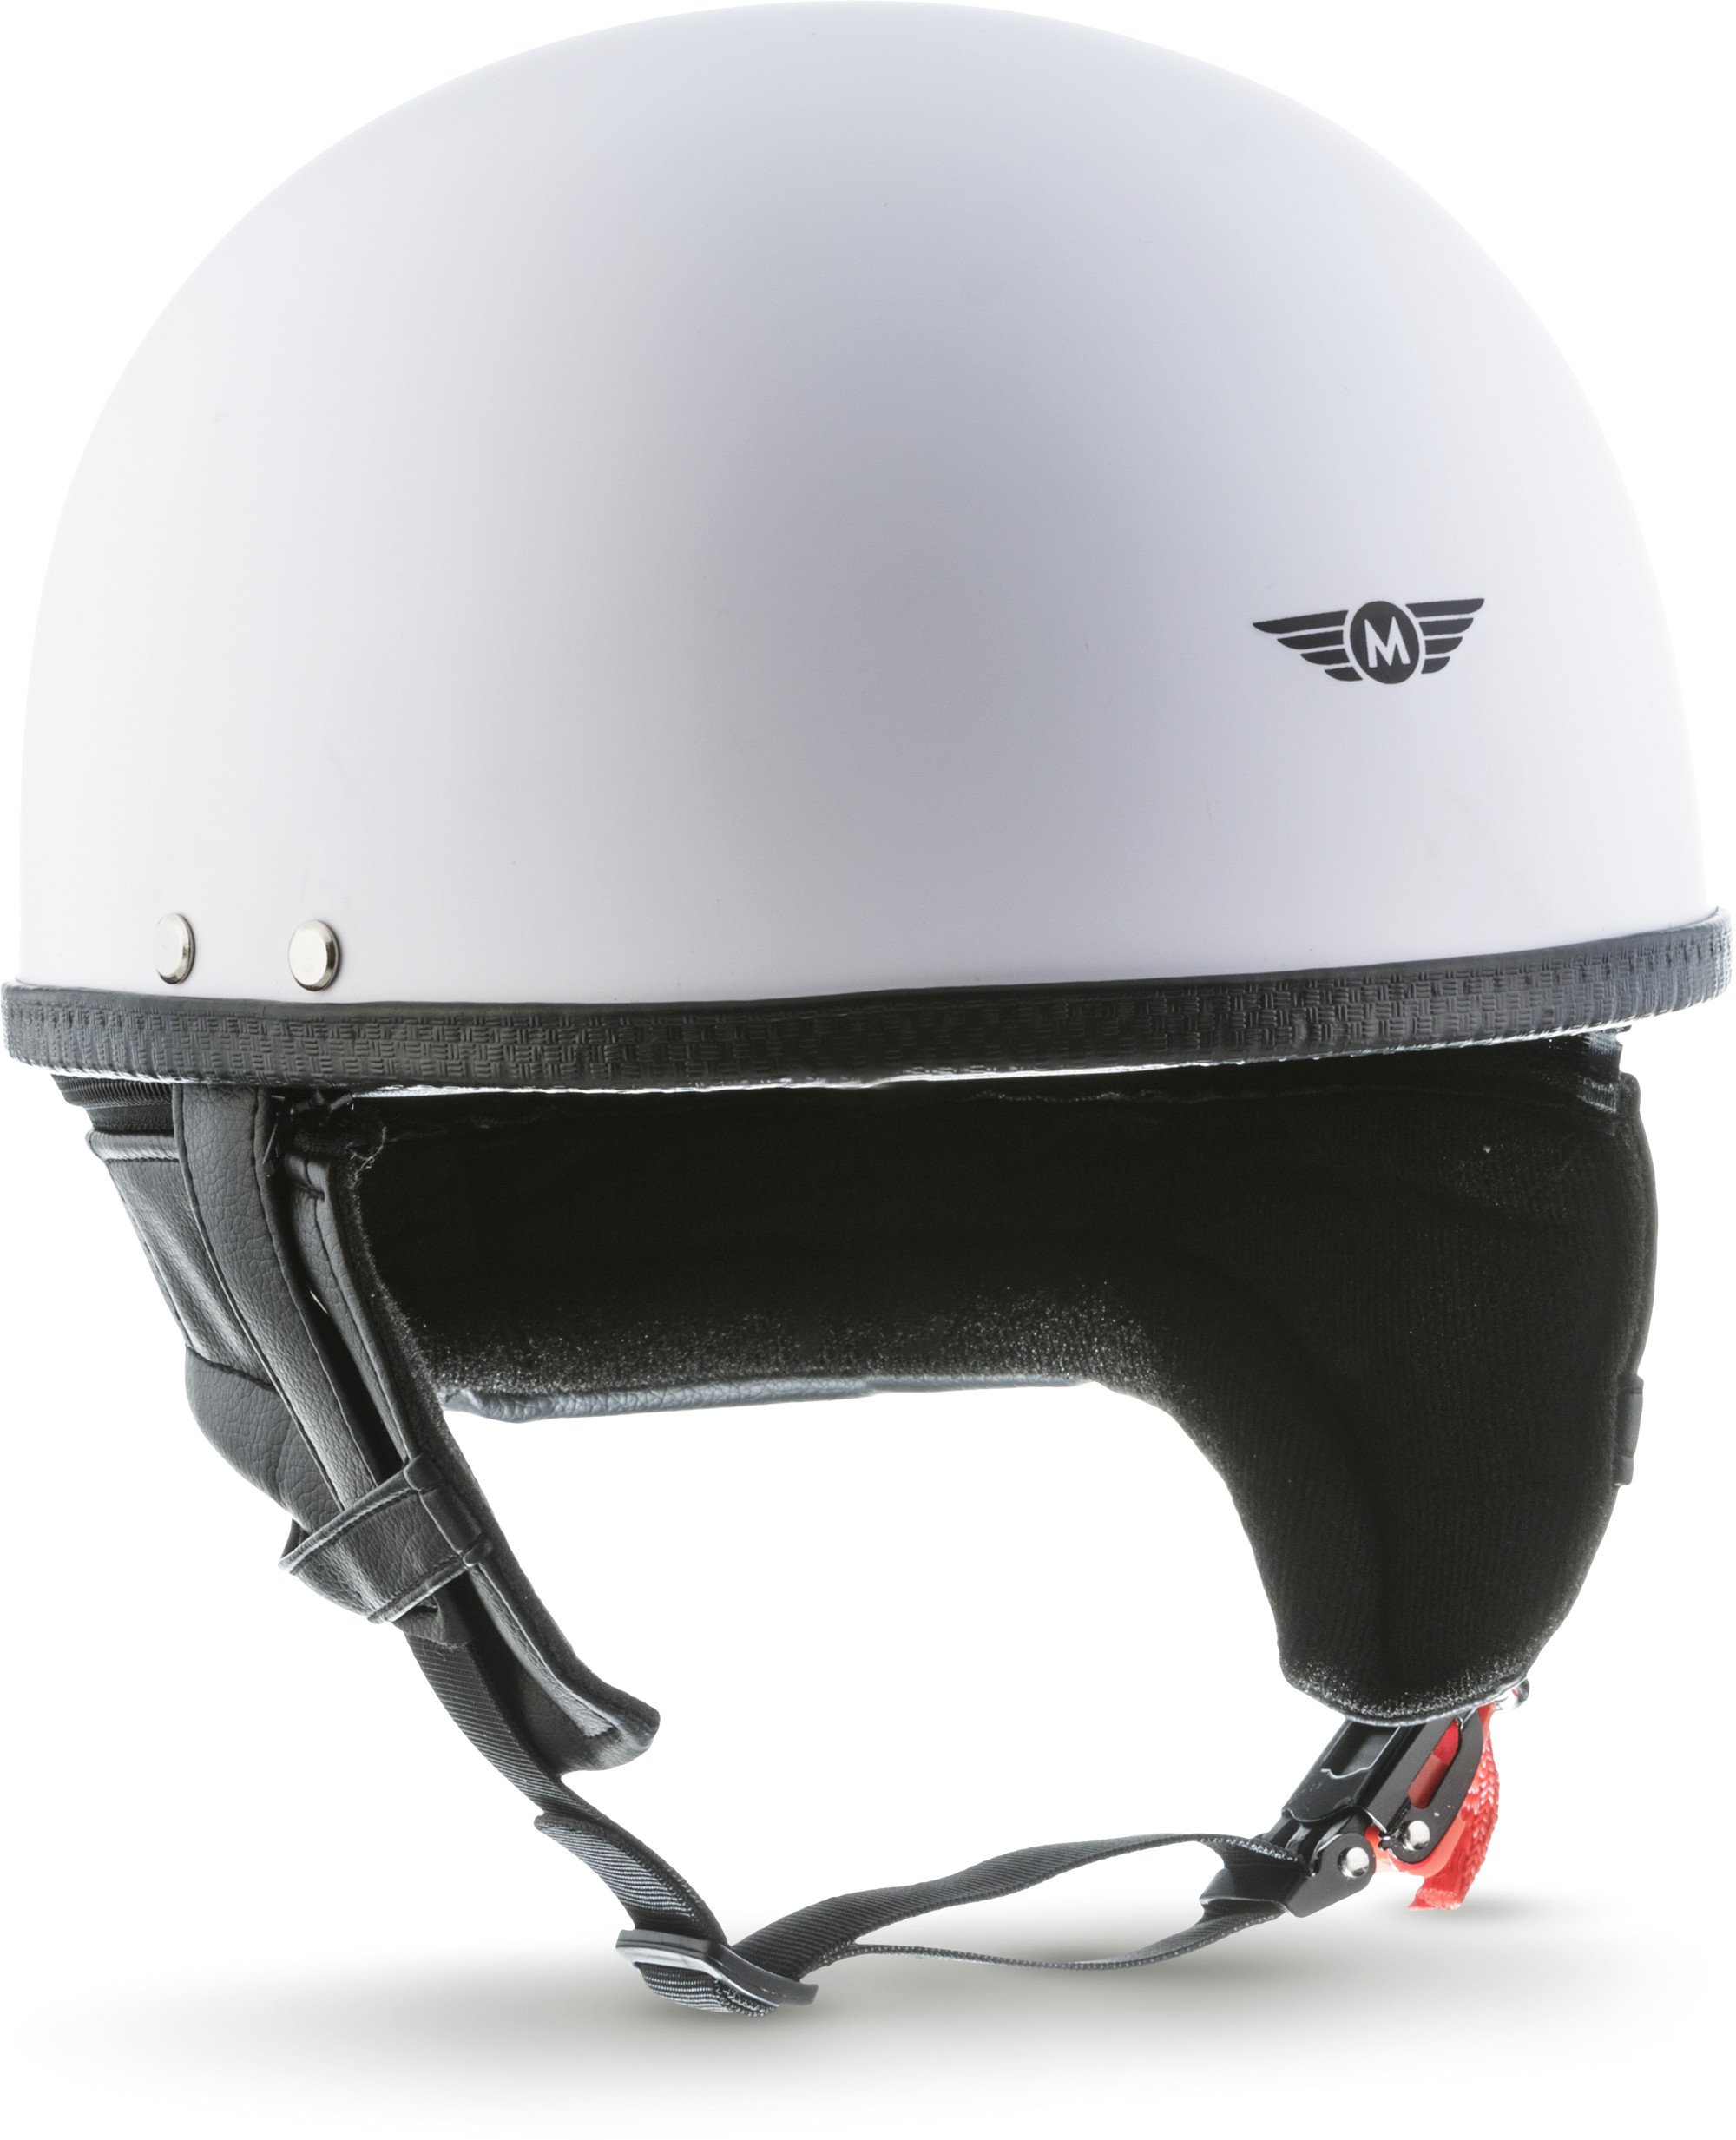 MOTO Helmets® D22 „Matt White“ · Brain-Cap · Halbschale Jet-Helm Motorrad-Helm Roller-Helm · Fiberglas Schnellverschluss SlimShell Tasche S (55-56cm)